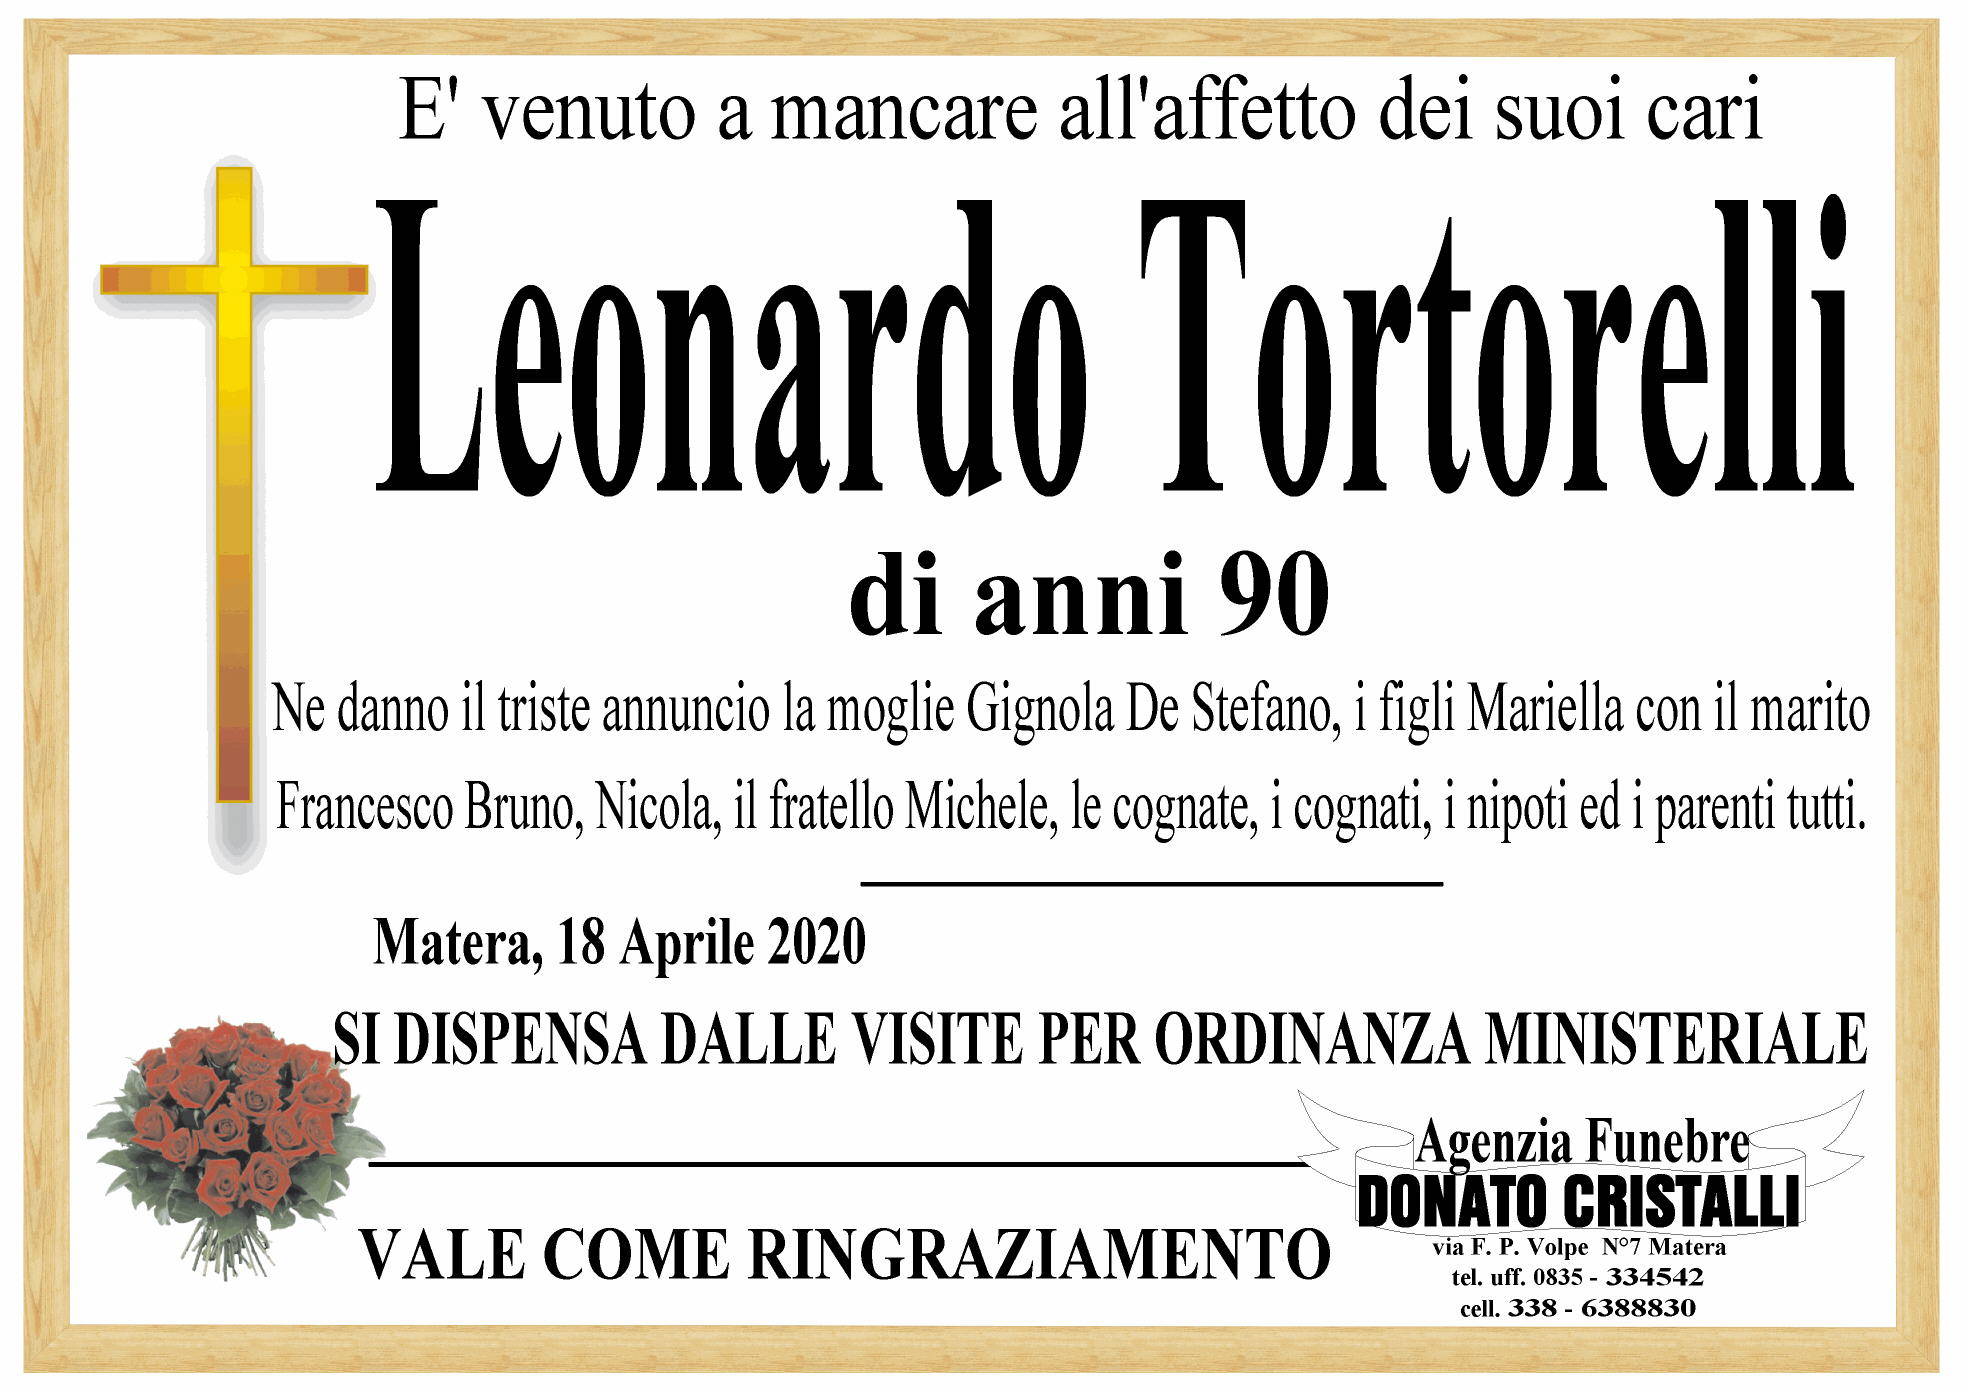 Leonardo Tortorelli